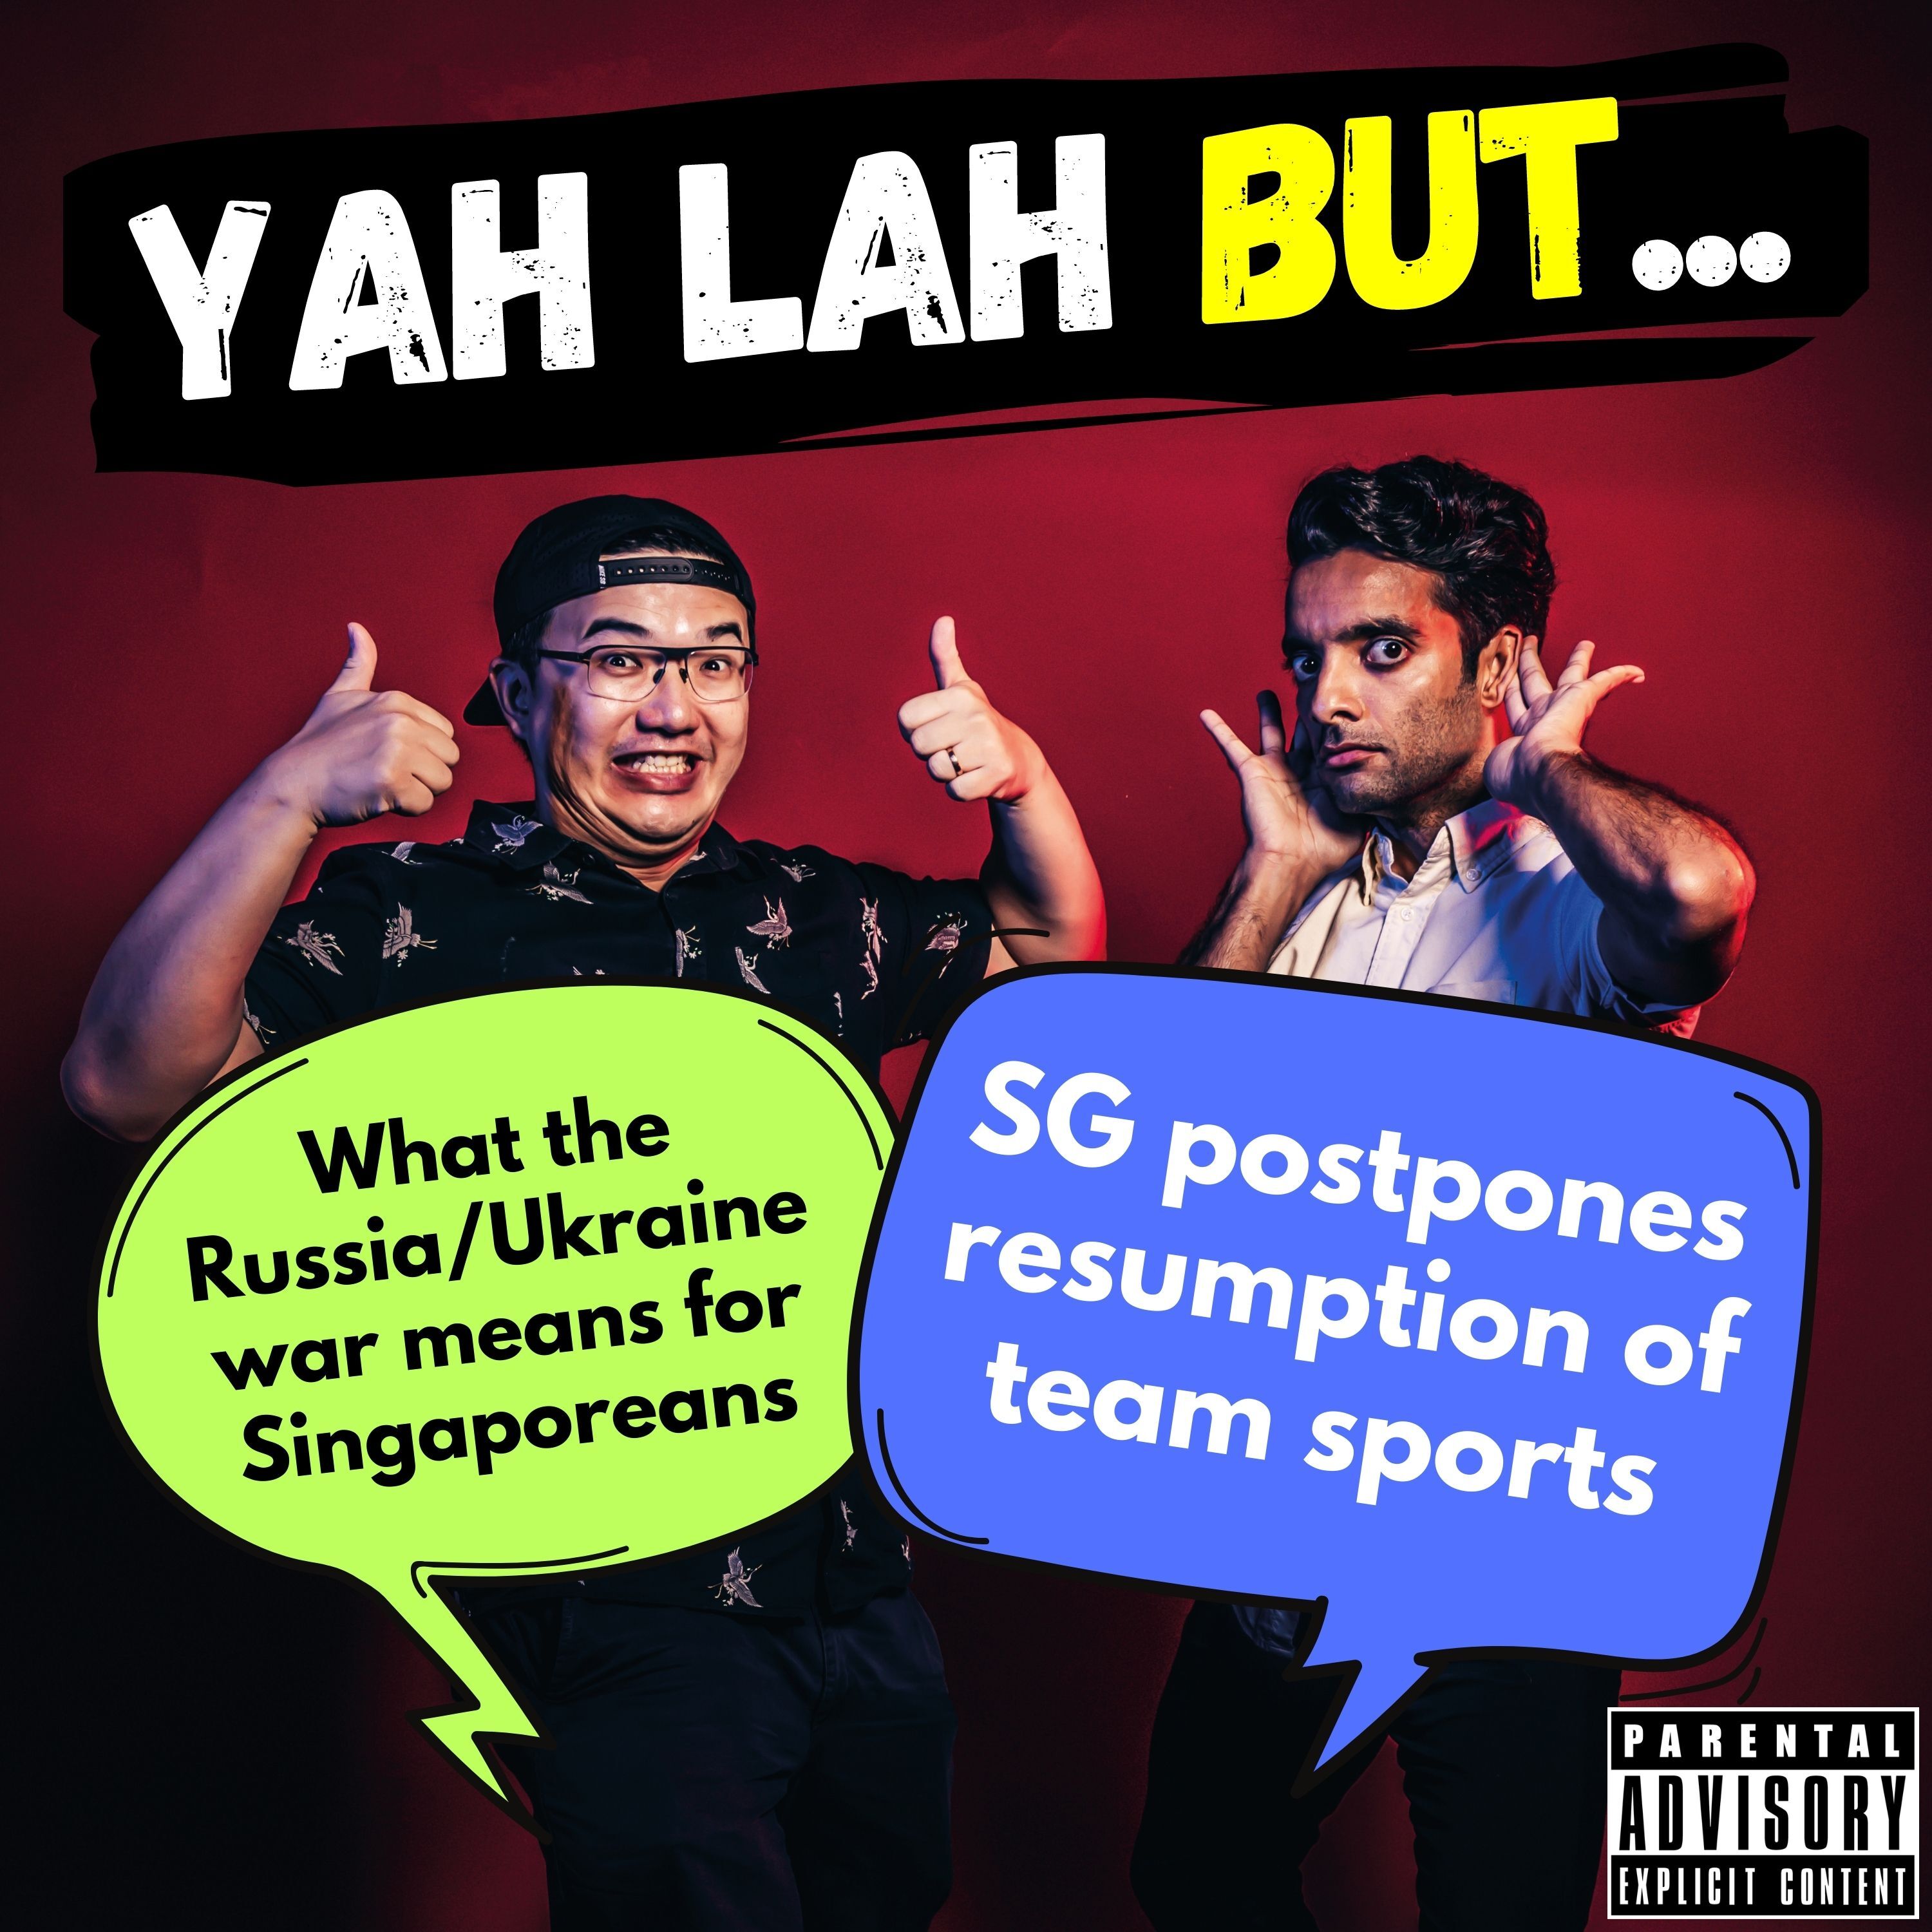 #268 - What the Russia/Ukraine war means for Singaporeans & SG postpones resumption of team sports